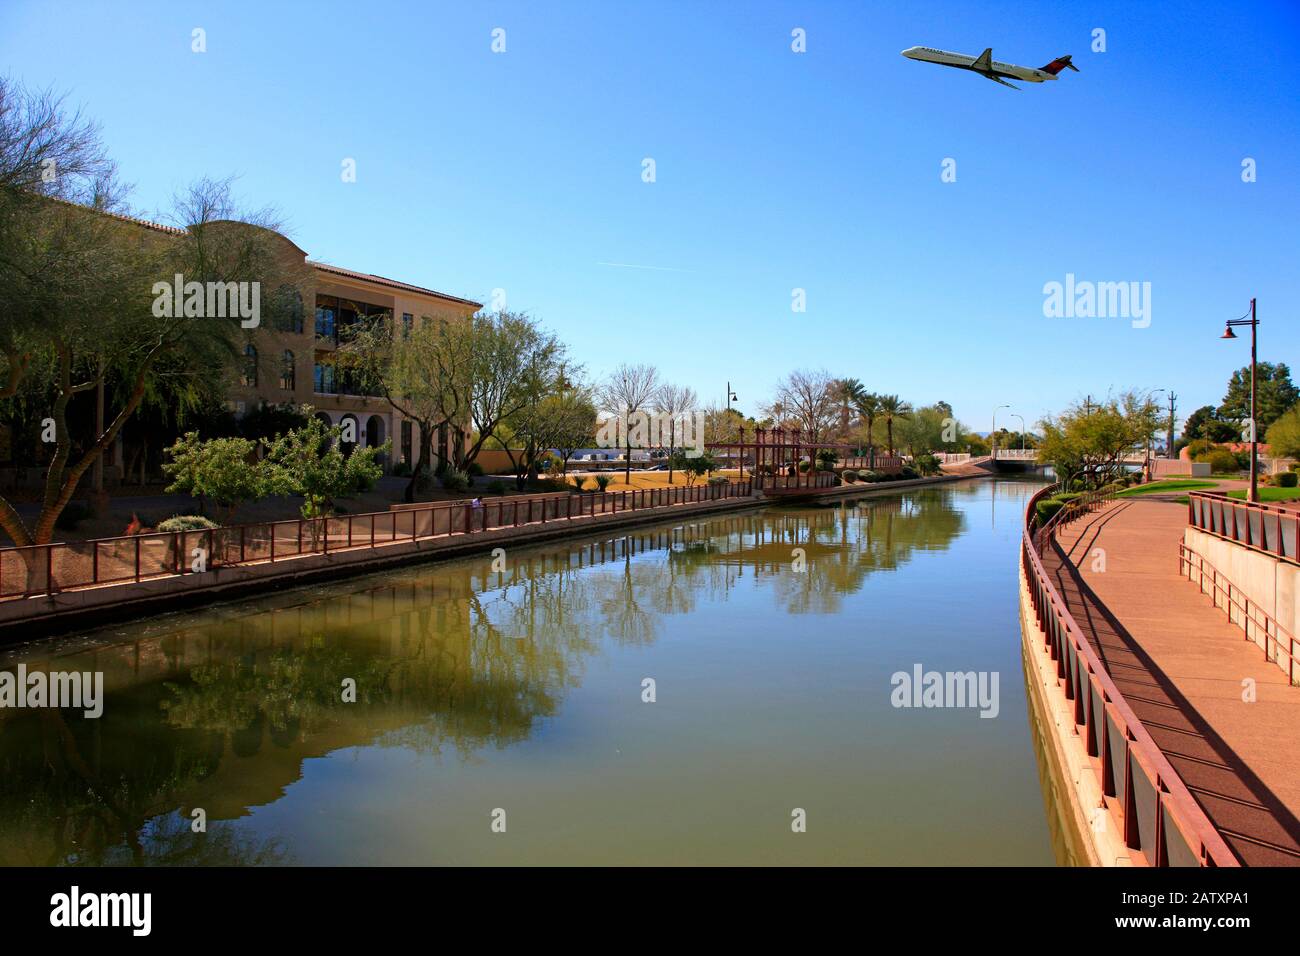 Apartments along the Arizona Canal in Scottsdale AZ Stock Photo